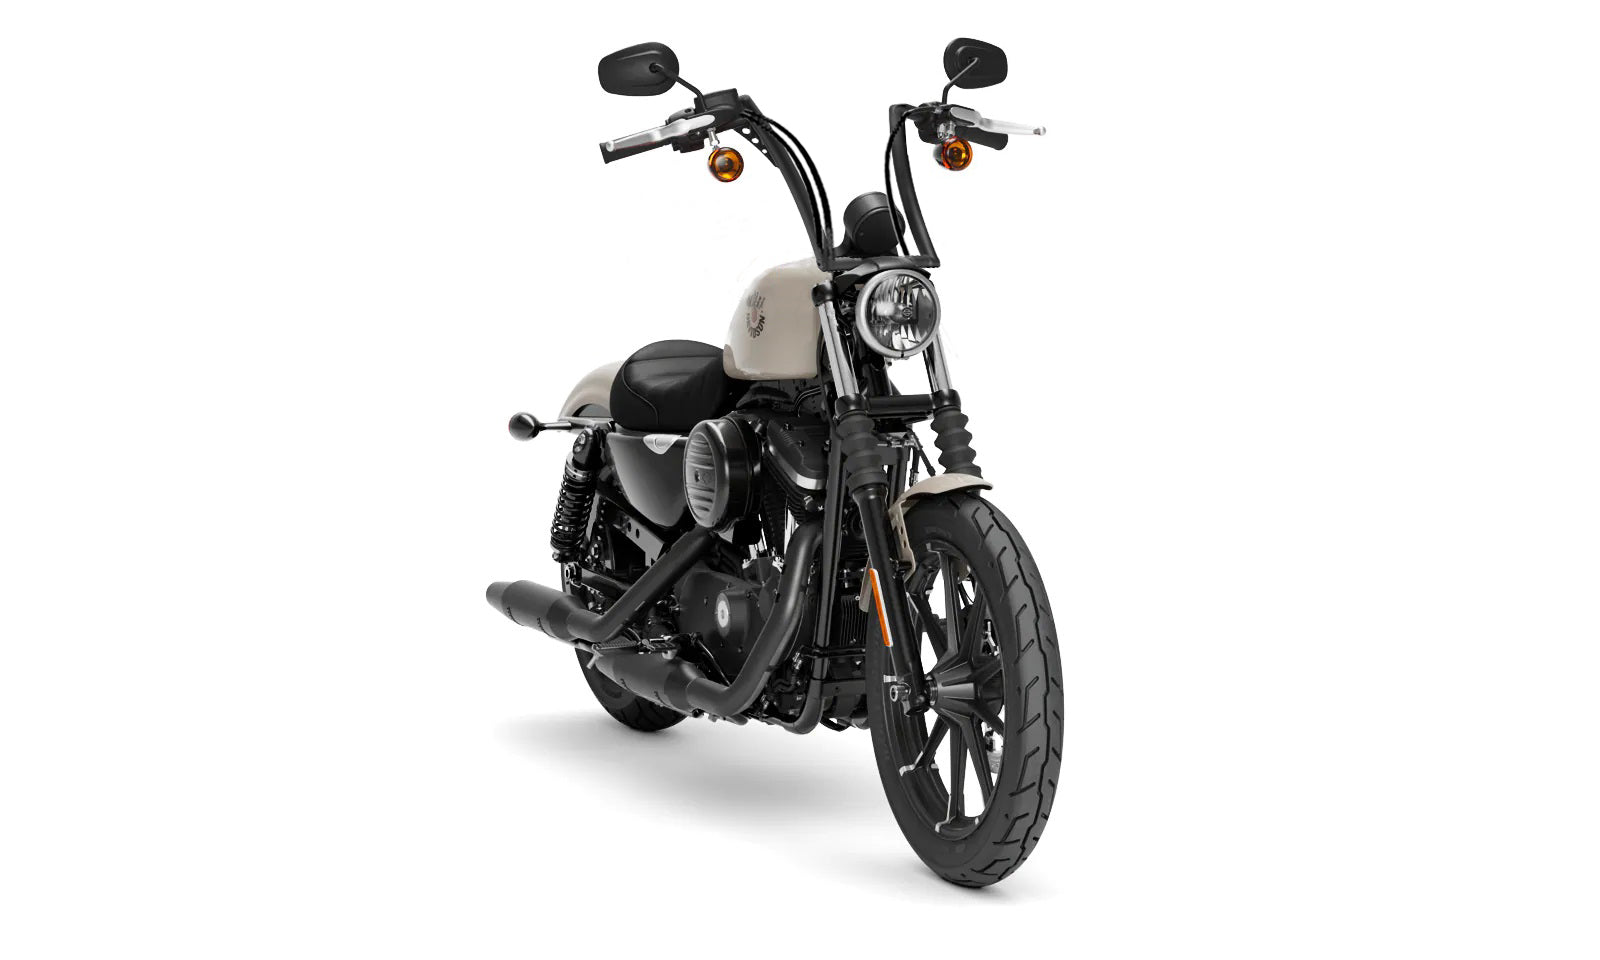 Viking Iron Born 12" Handlebar for Harley Sportster 883 Iron XL883N Matte Black Bag on Bike View @expand